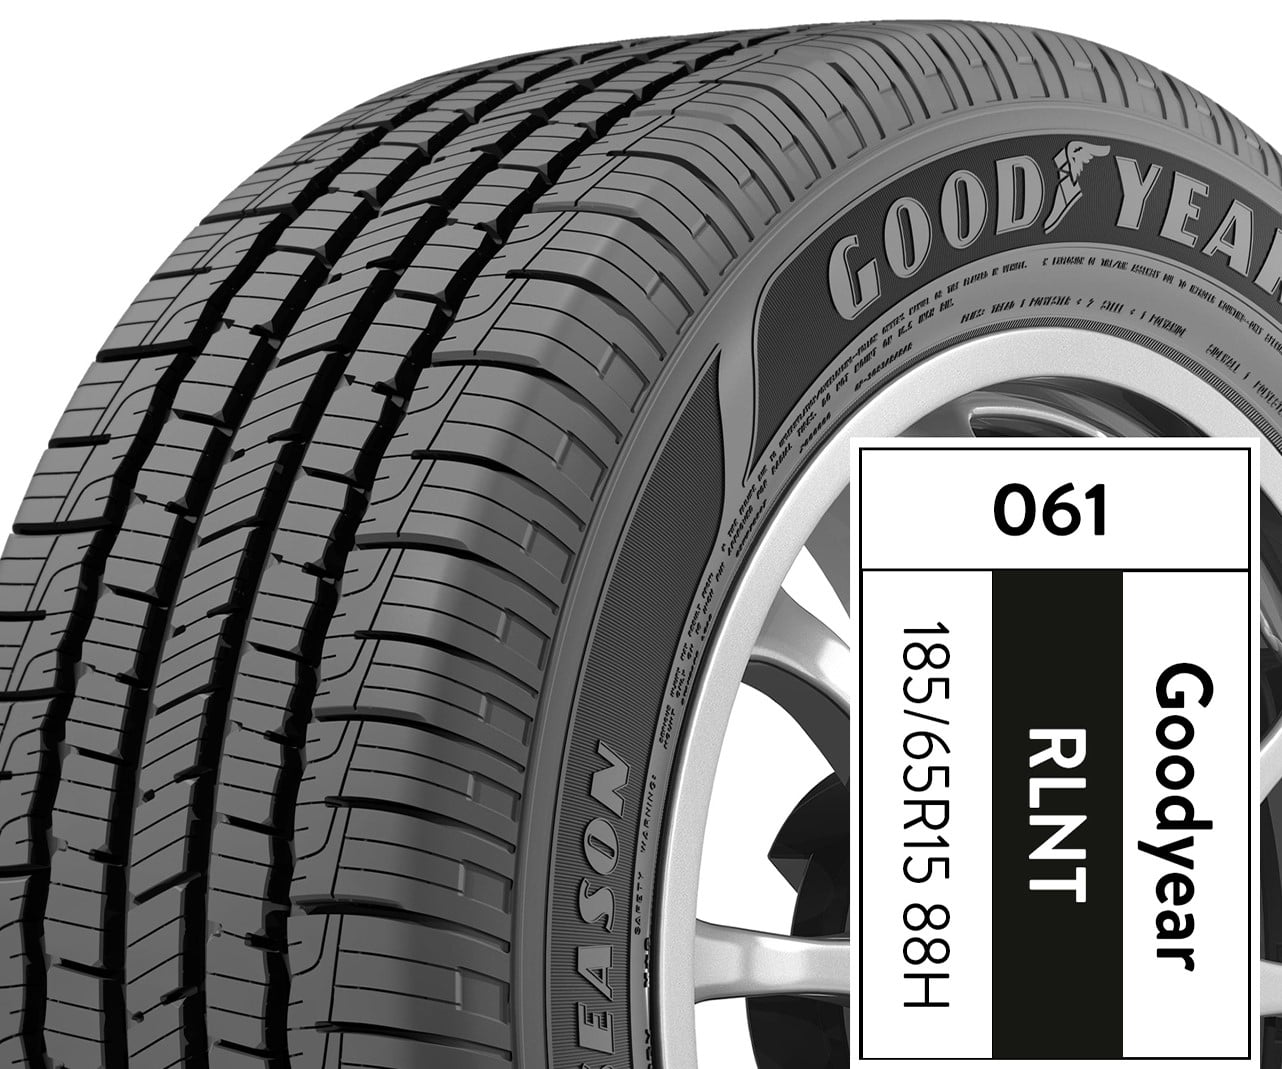 Goodyear Reliant All-Season 185/65R15 88H All-Season Tire